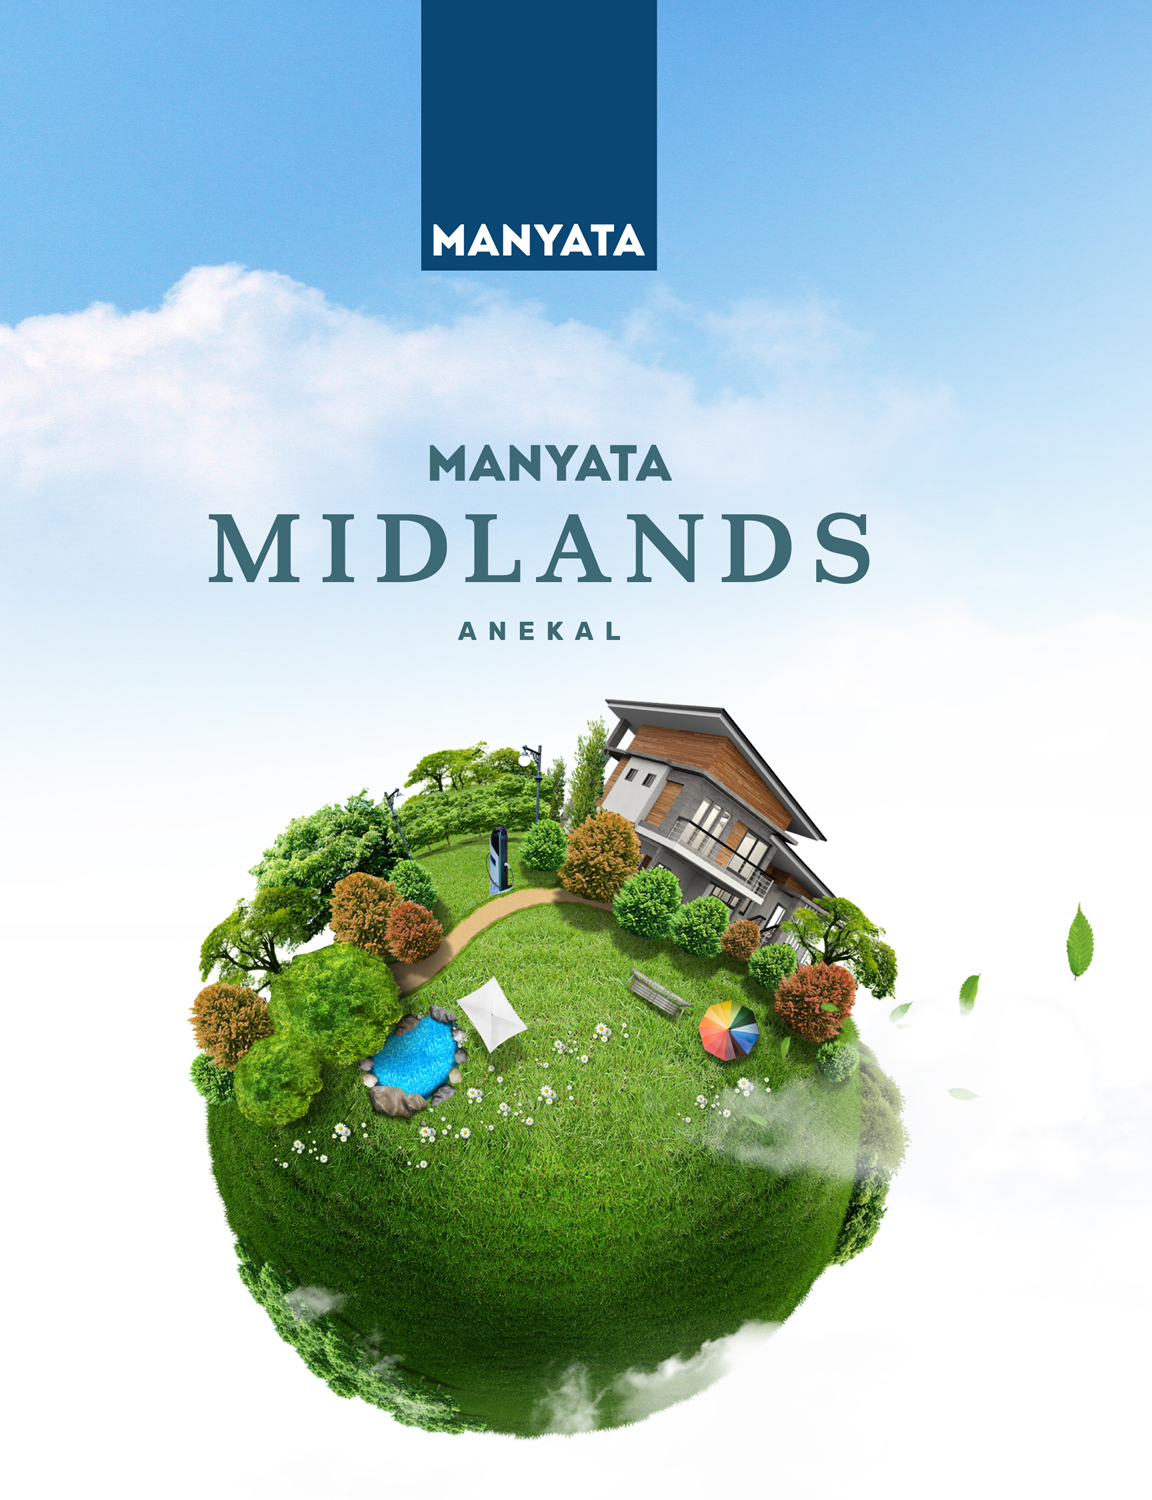 Manyata Midlands logo